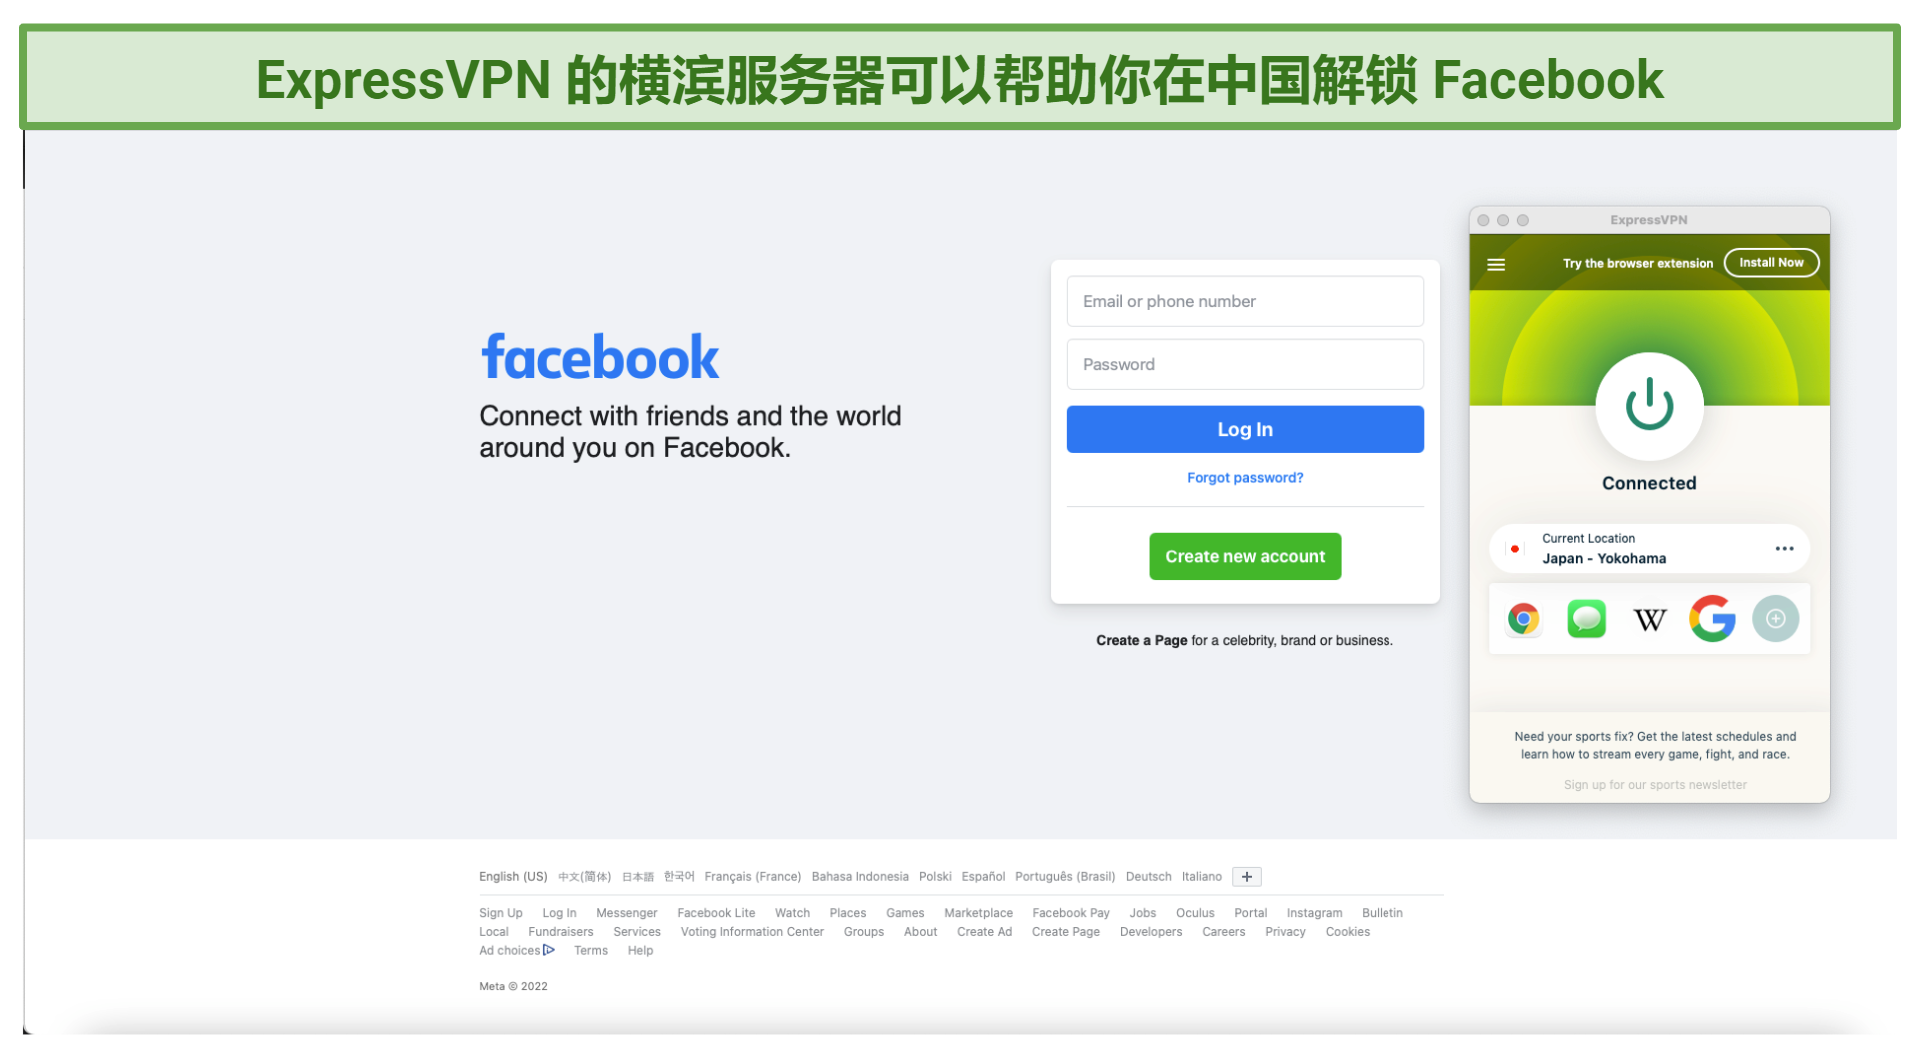 A screenshot showing that ExpressVPN's Yokohoma server unblocks Facebook in China